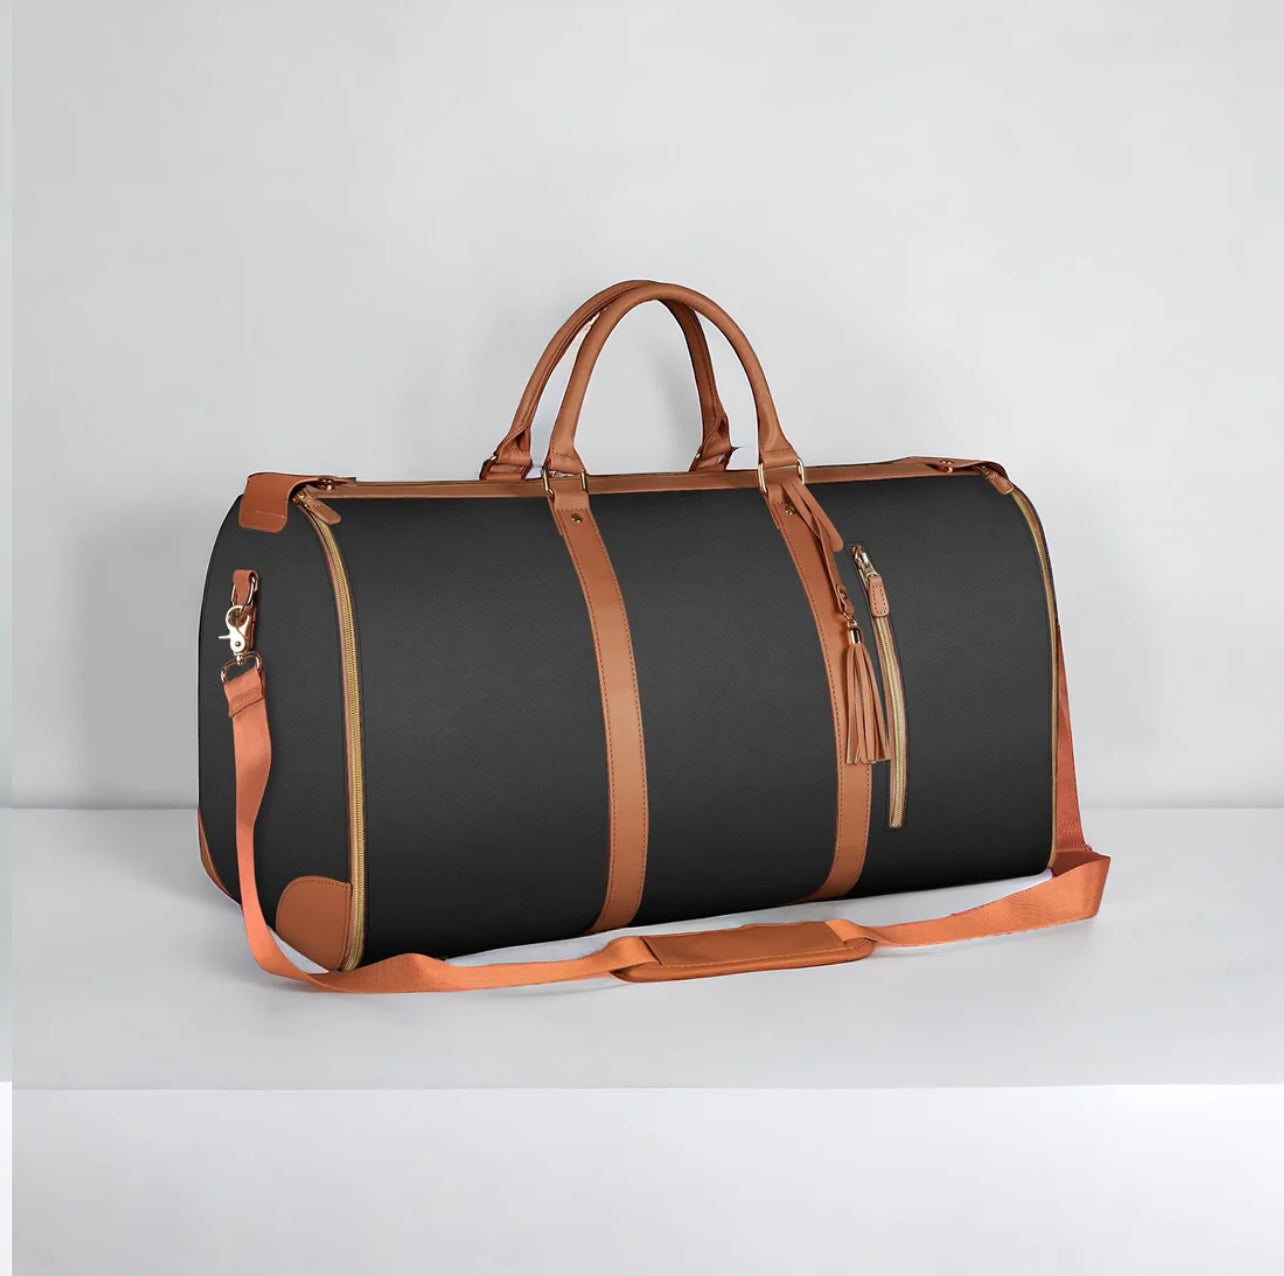 Travelneasy - The Perfect Travel Bag